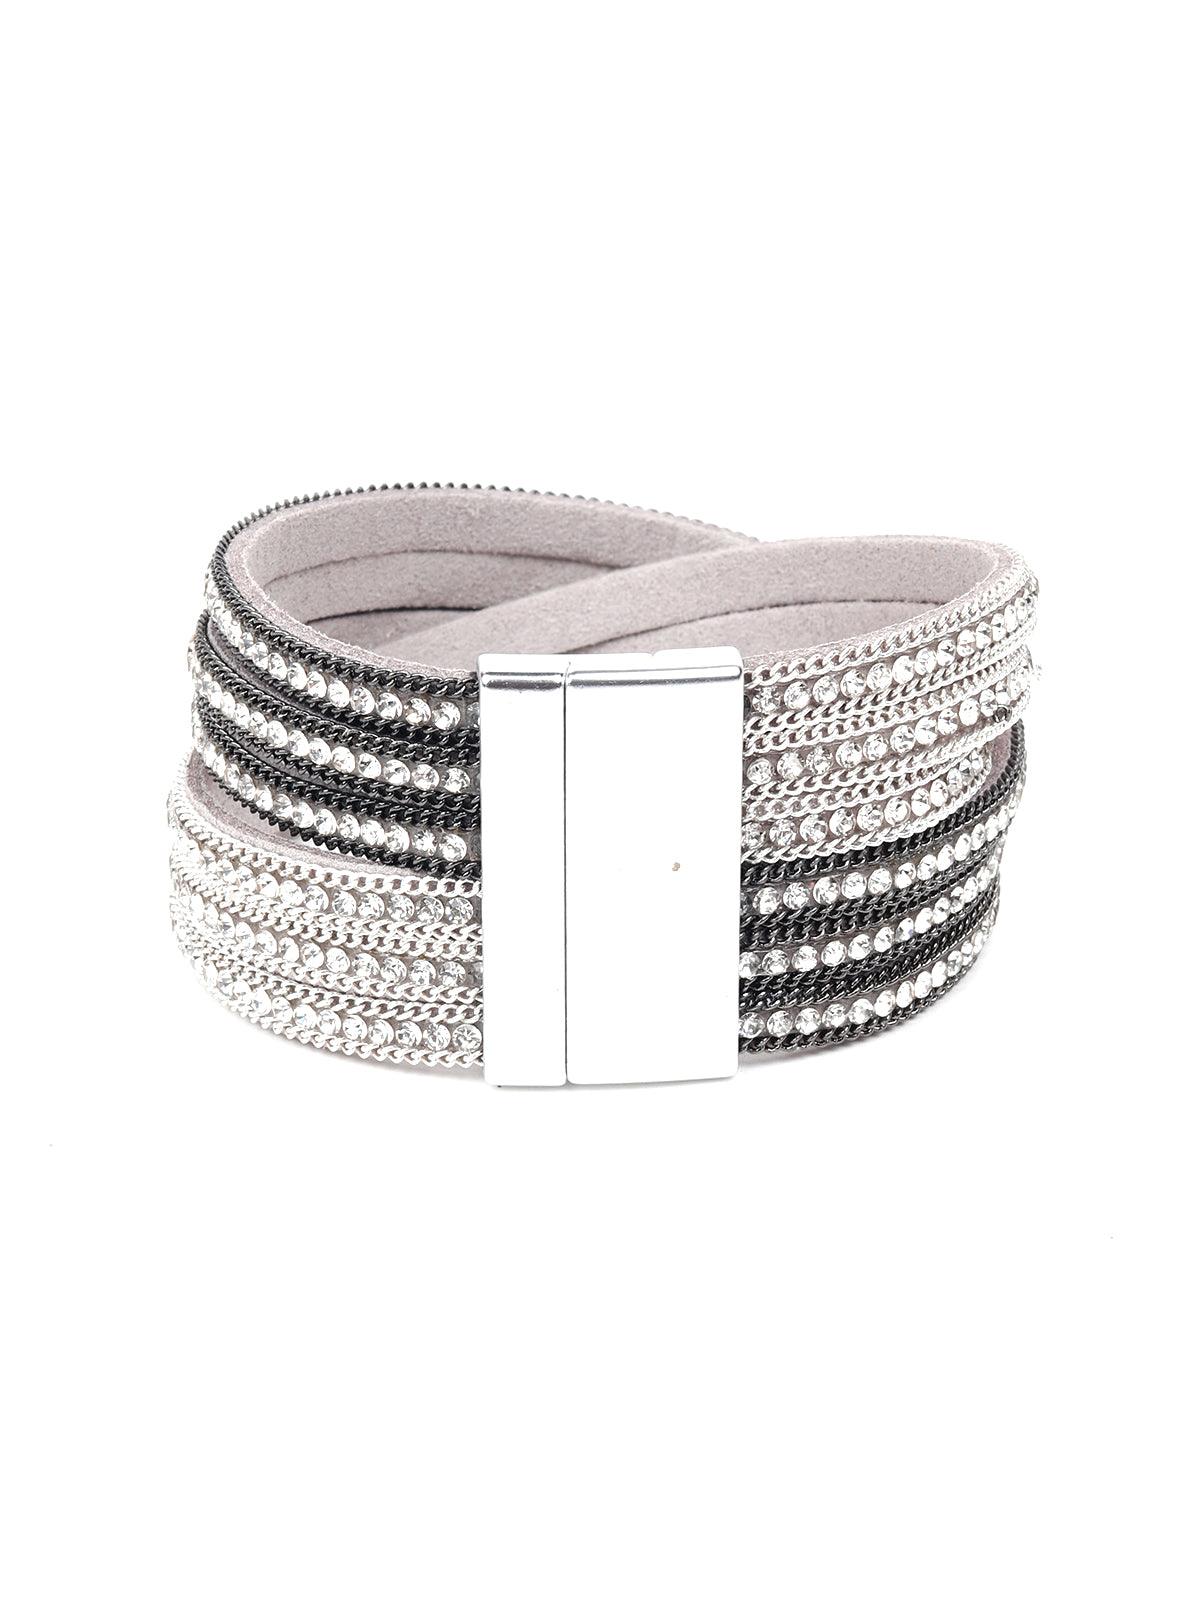 Women's Stunning Silver Twisted Statement Band Bracelet - Odette